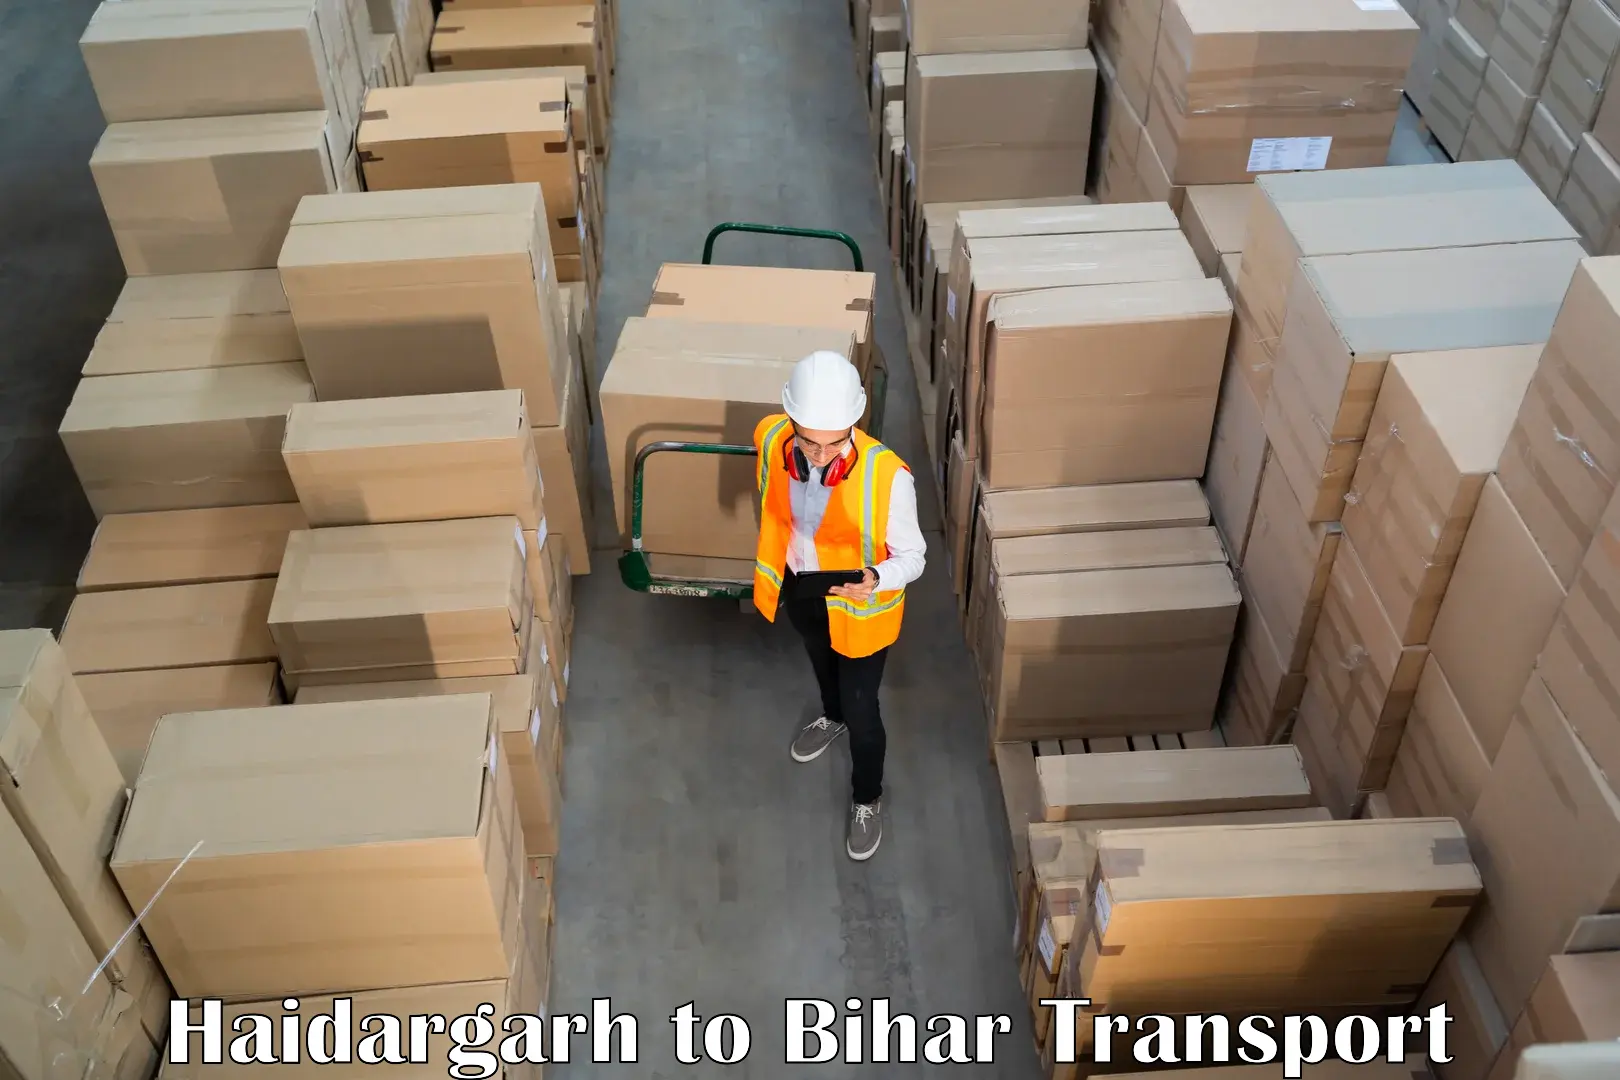 Truck transport companies in India Haidargarh to Mojharia